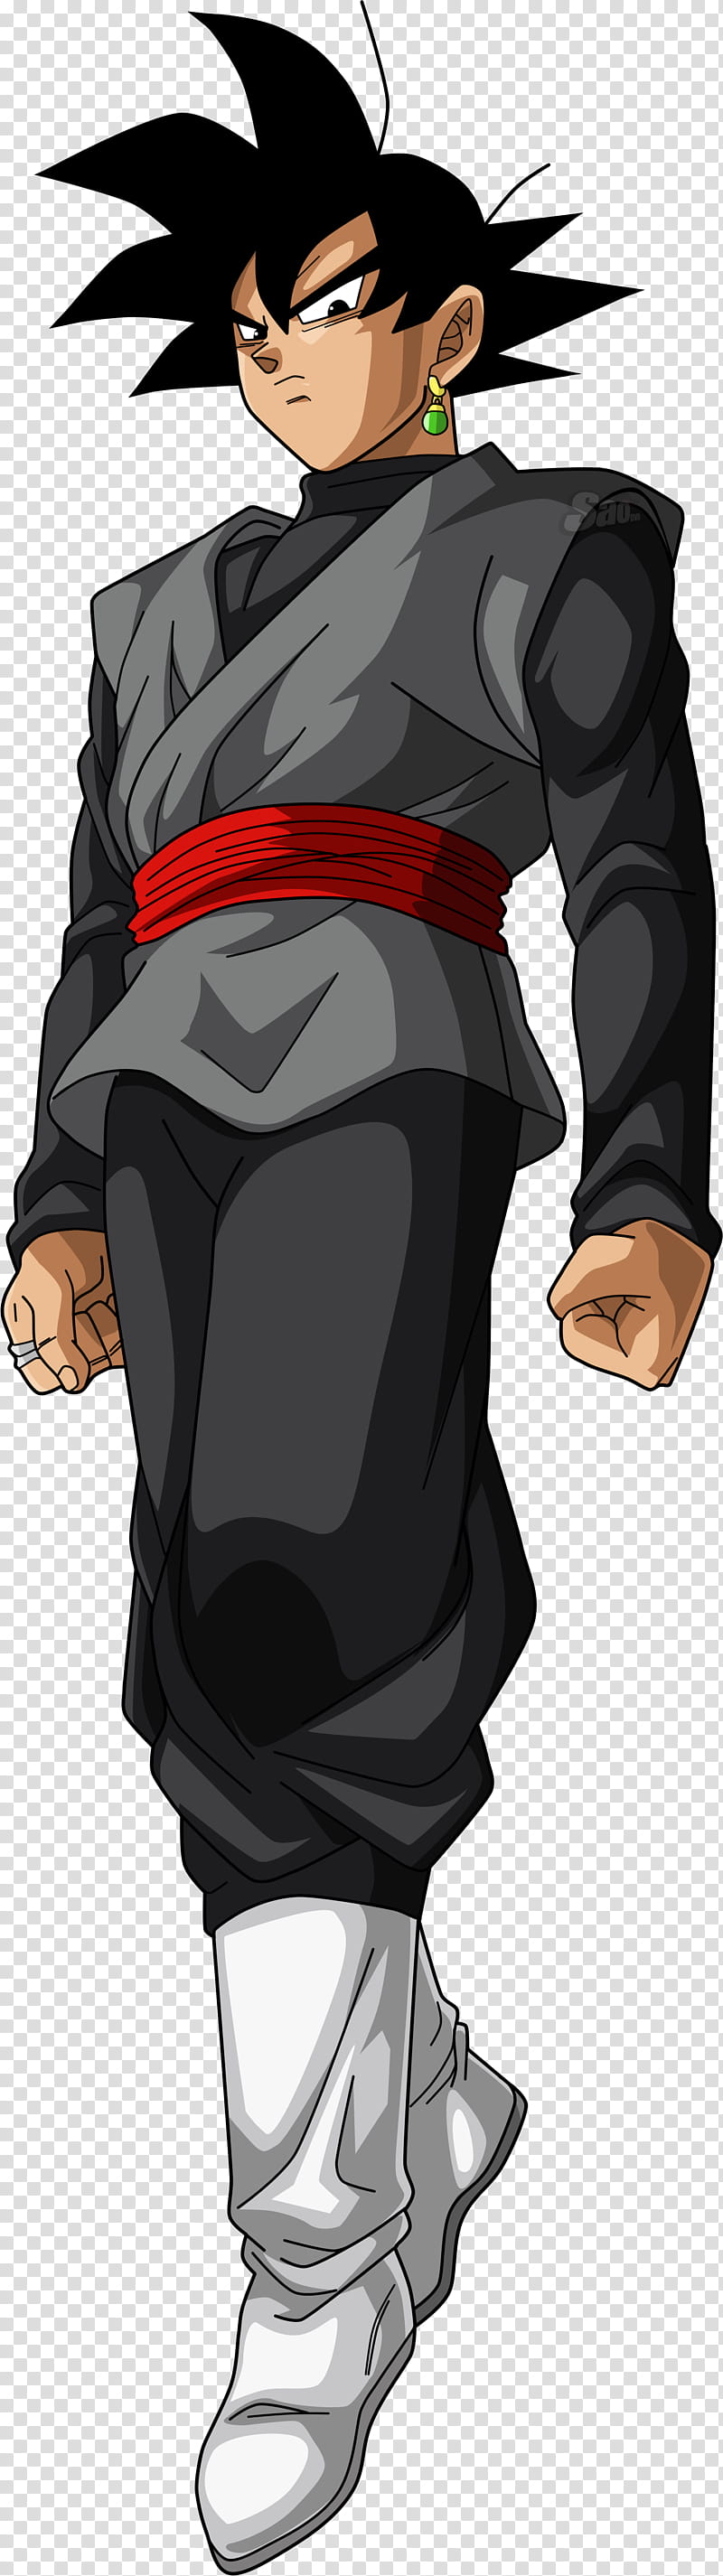 Goku Black V, Dragon Ball character illustration transparent background PNG clipart